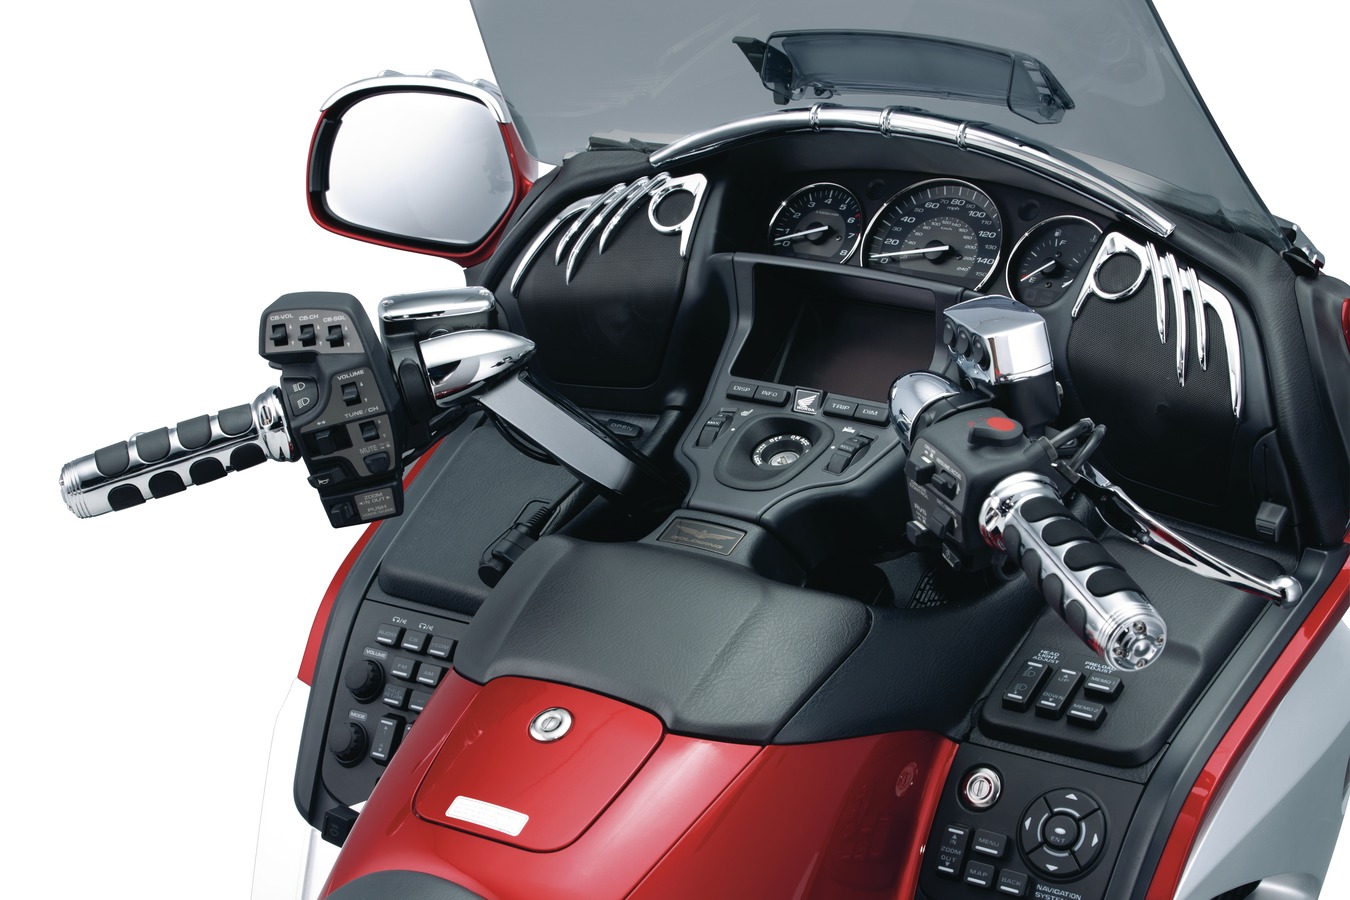 Kuryakyn ISO-Grips In Chrome Finish For Honda Gold Wing Motorcycles (6180)  ARH Custom UK